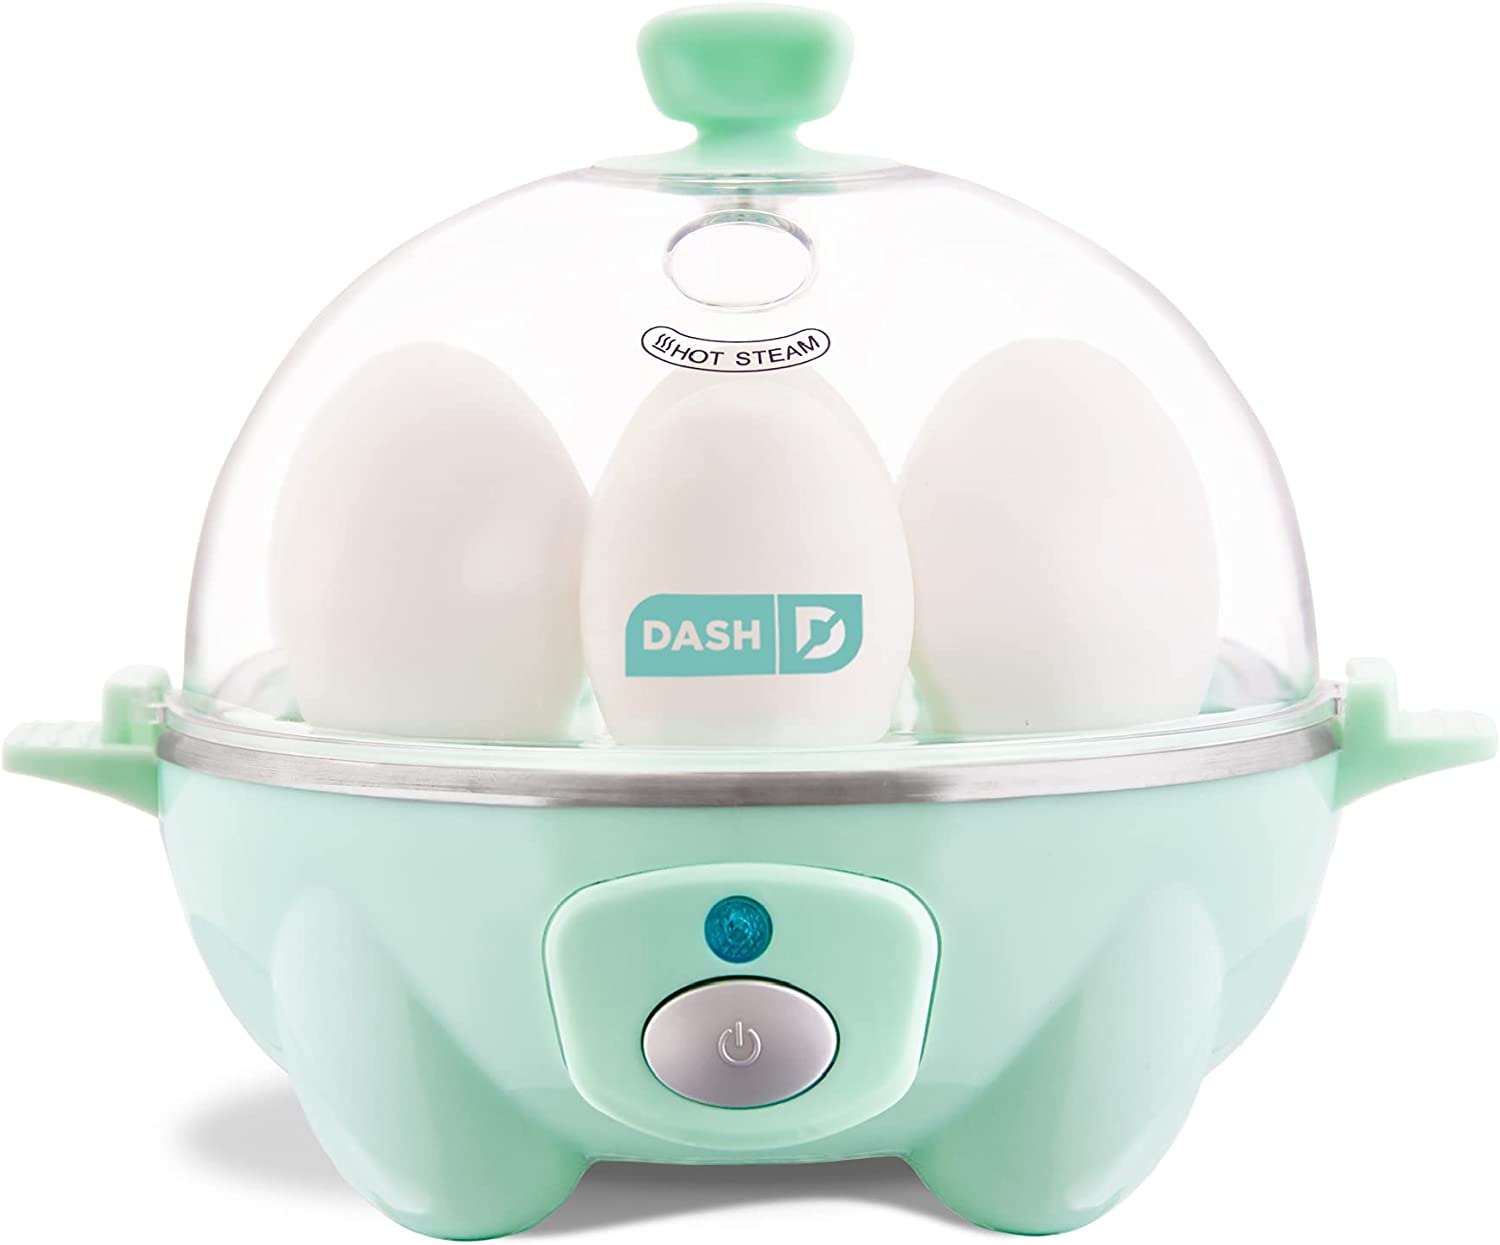 Dash Rapid Egg Cooker 6 Egg Capacity Electric